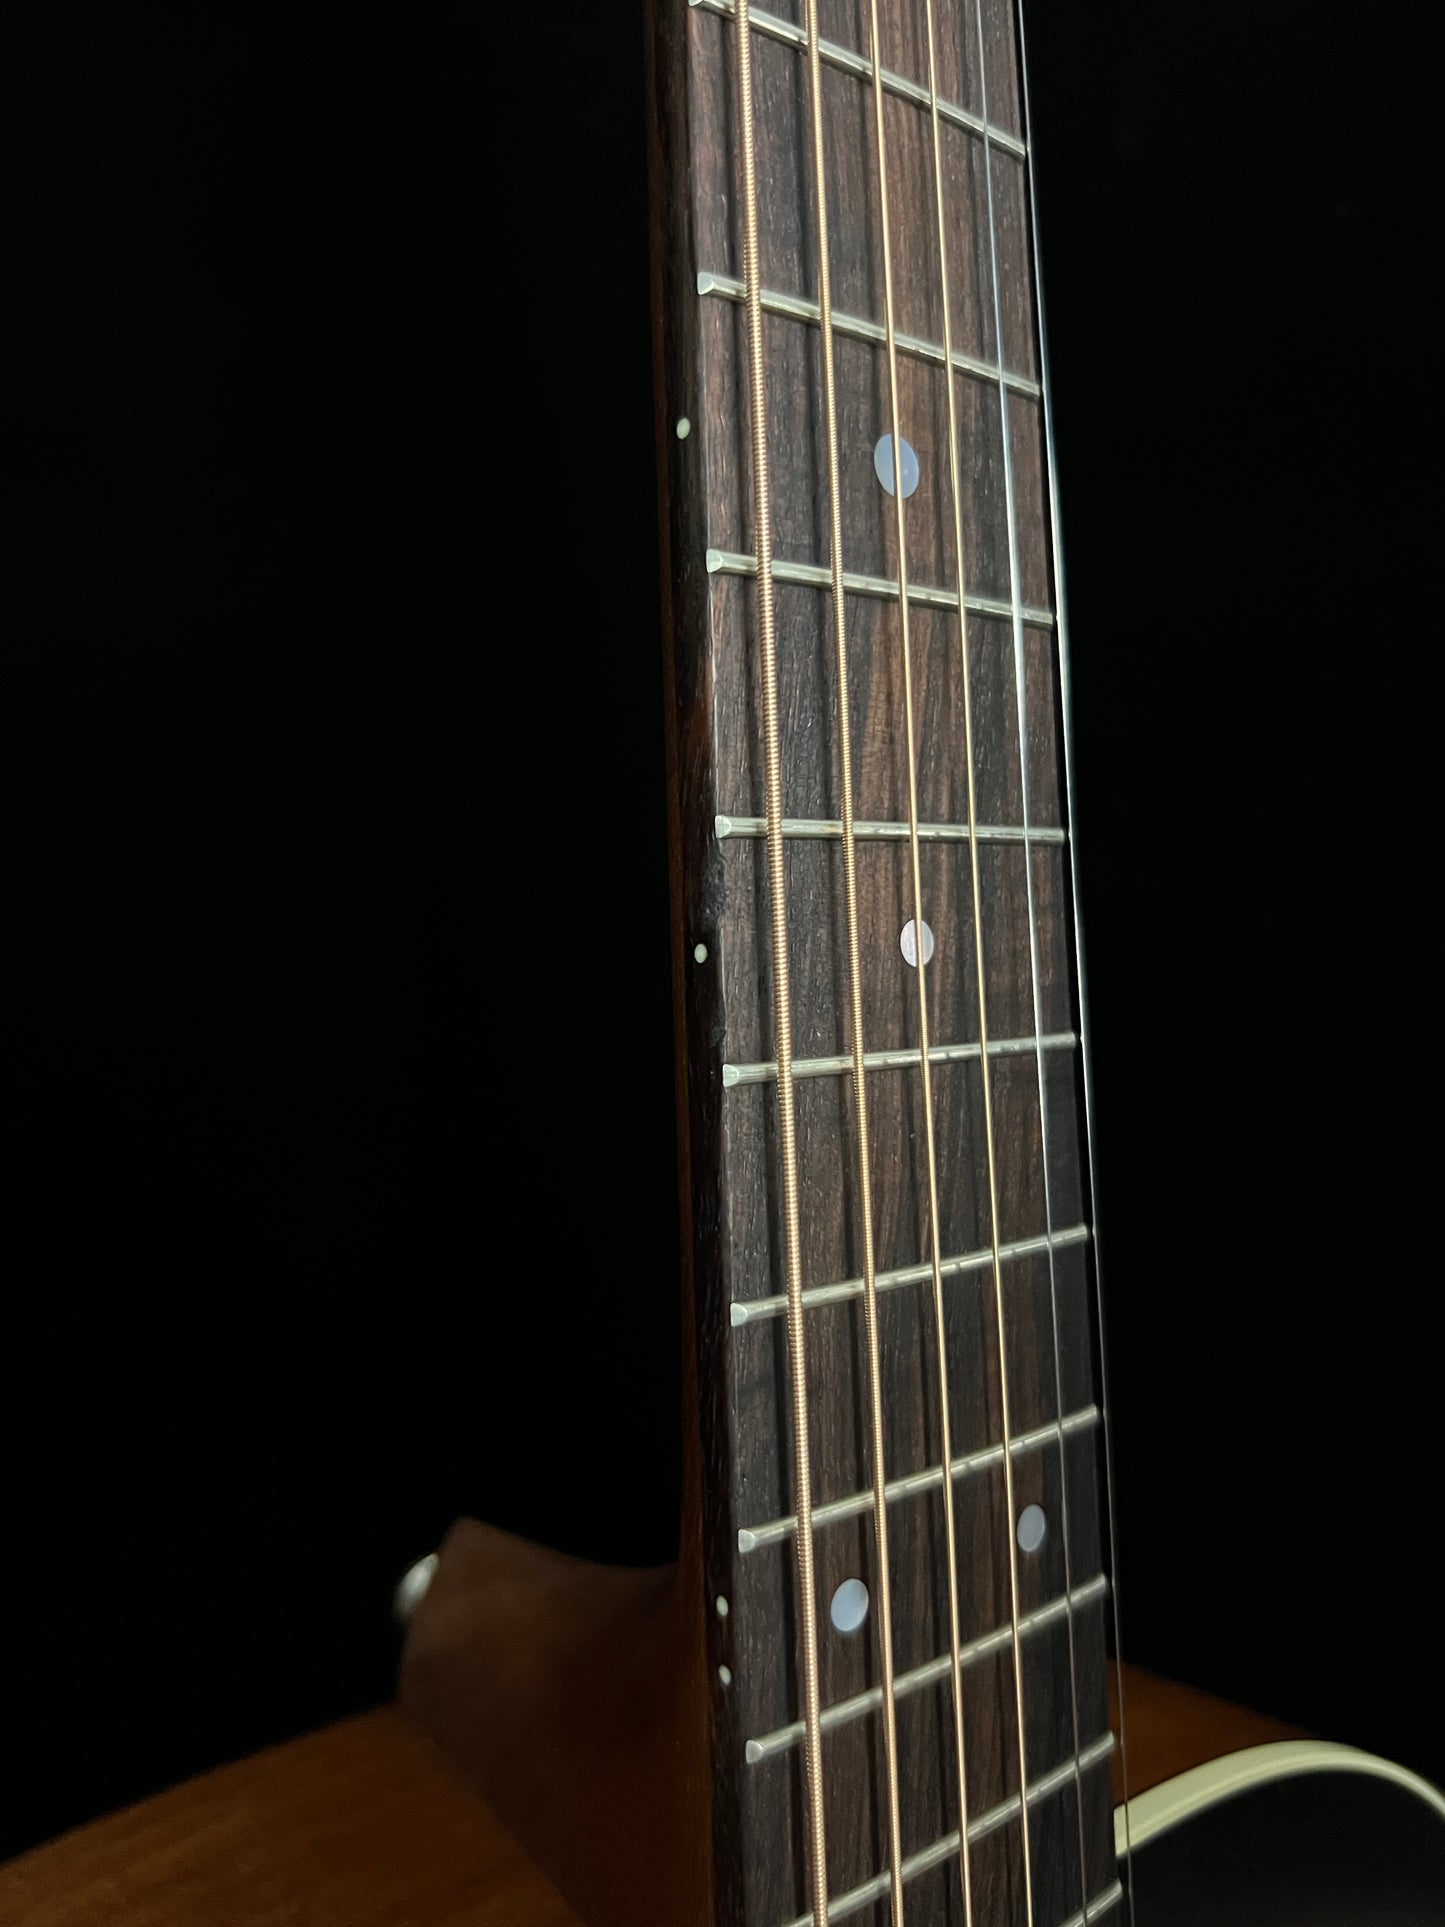 2023 Martin DSS-17 Whiskey Sunset Slope Shoulder Acoustic Guitar - Used